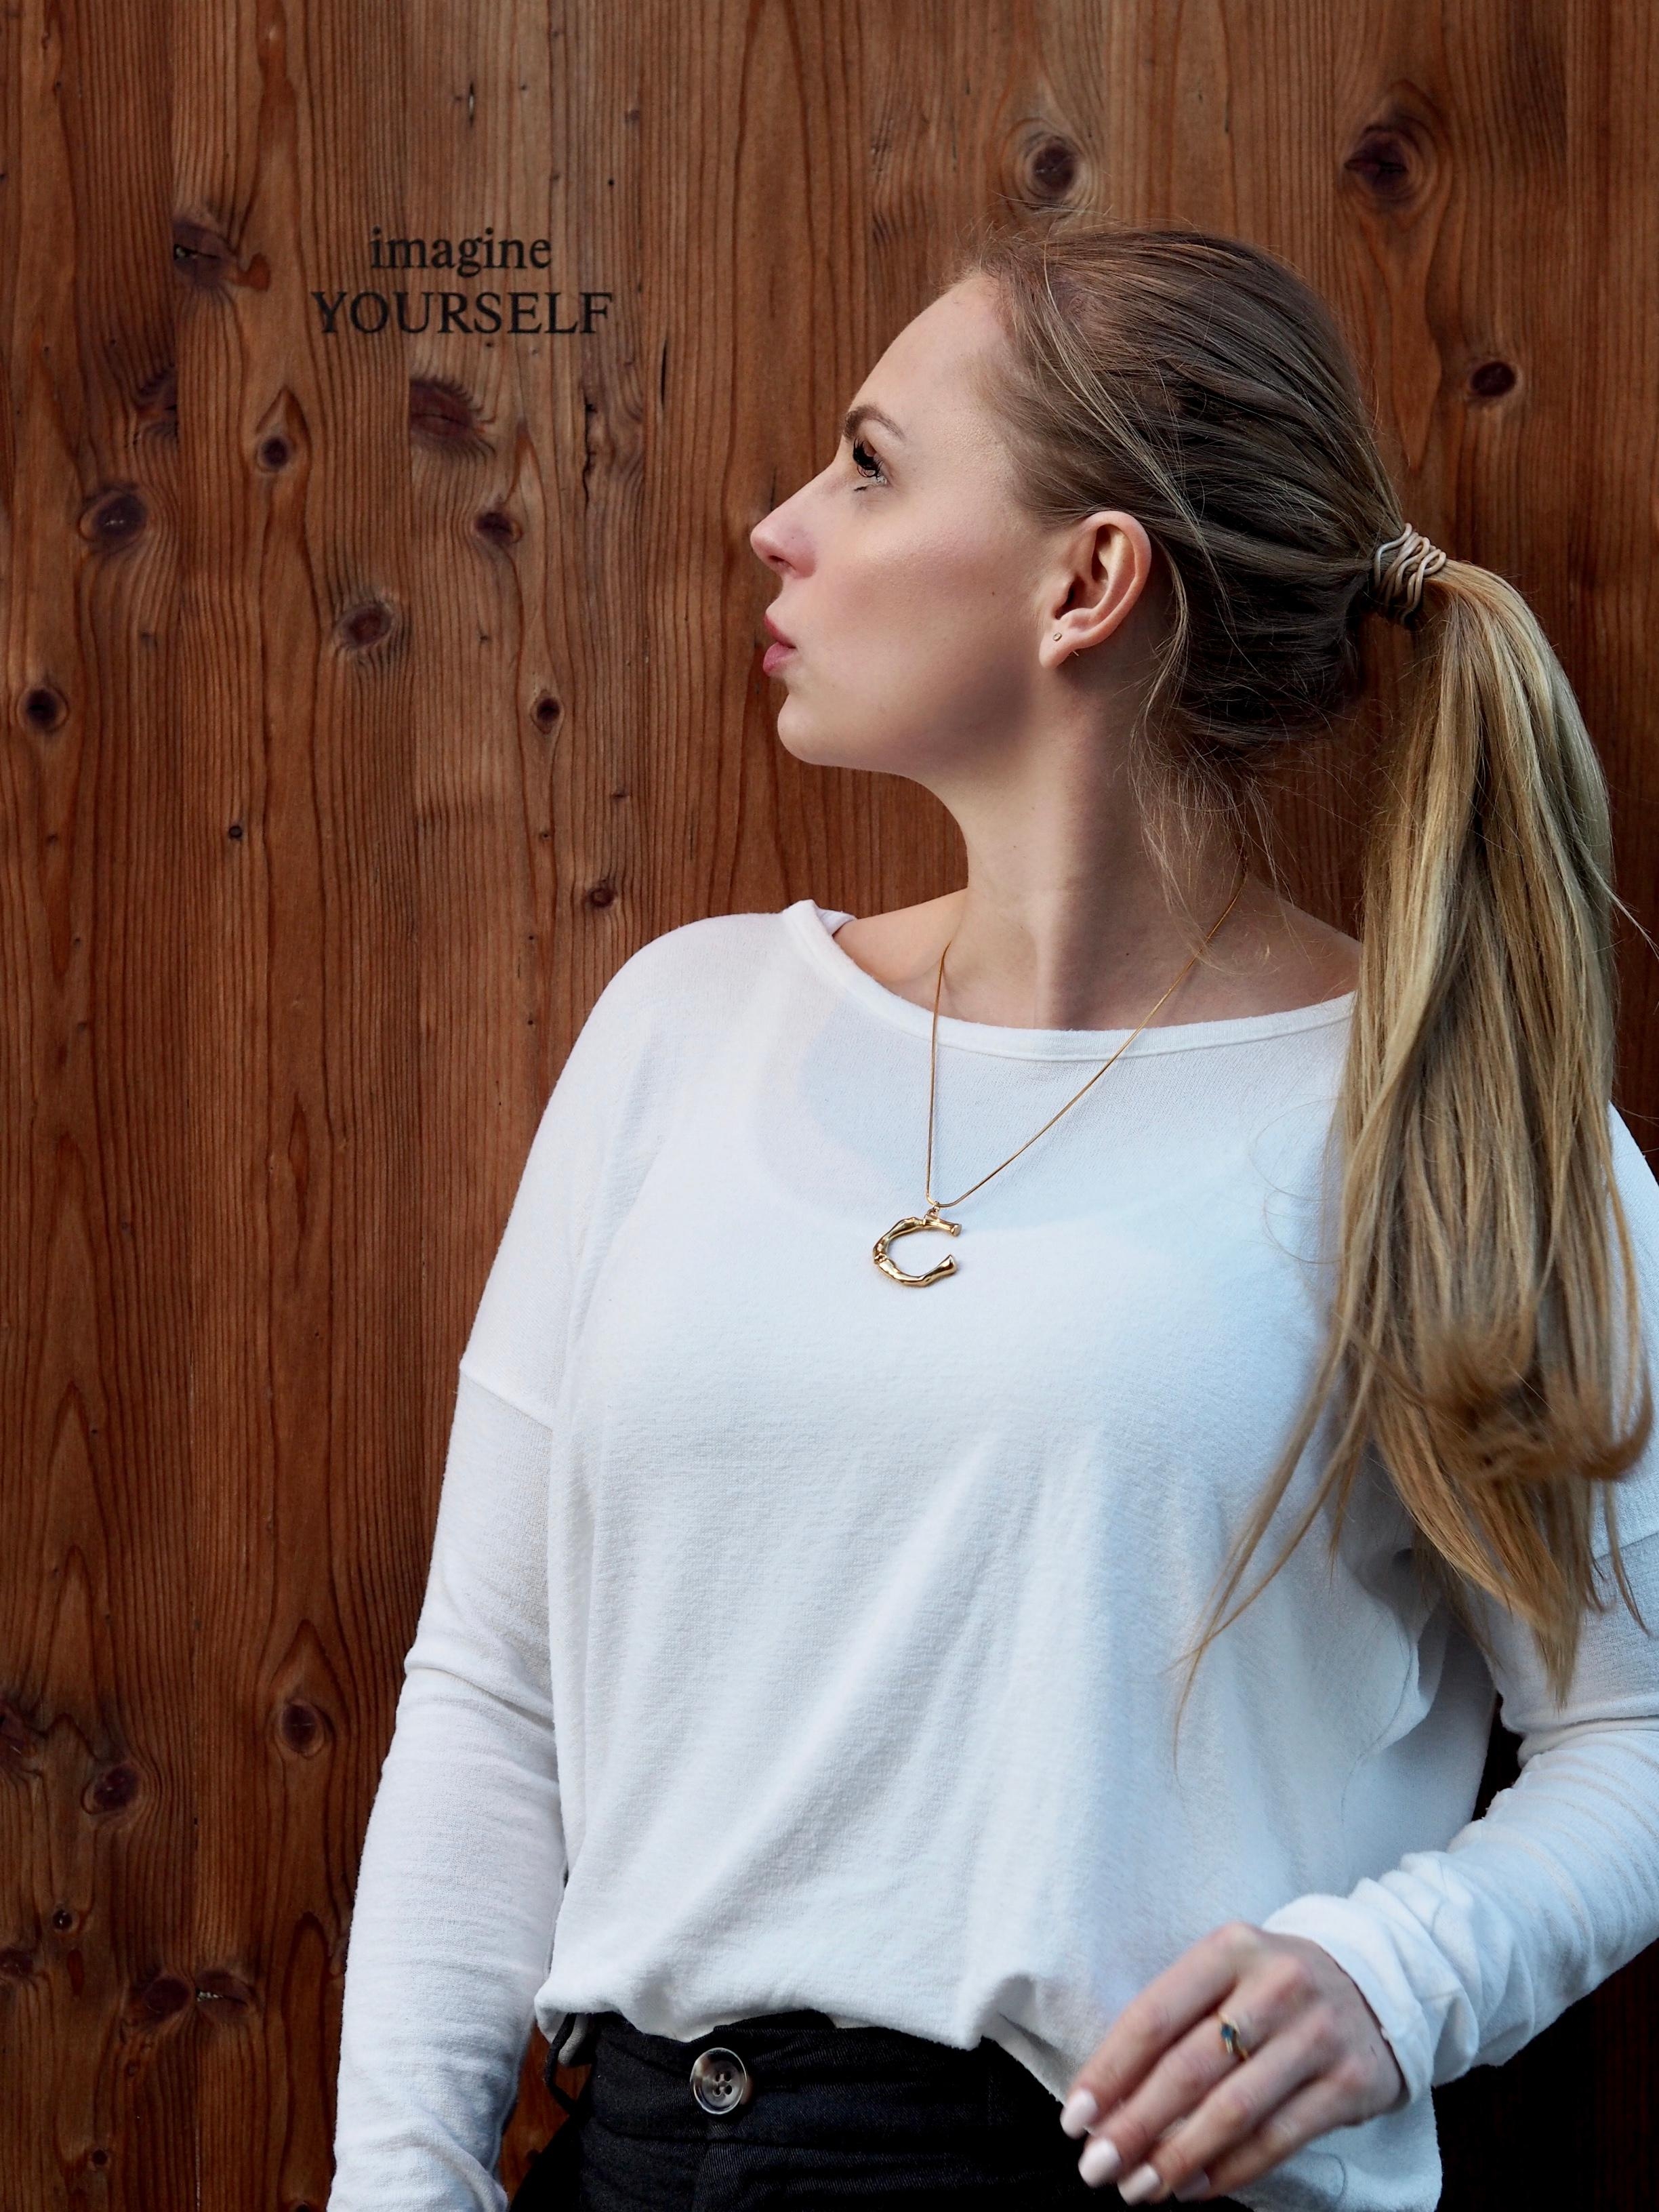 Imagine Yourself 😉 #chloe #accessoires #schmuck #kette #pferdeschwanz #pullover 